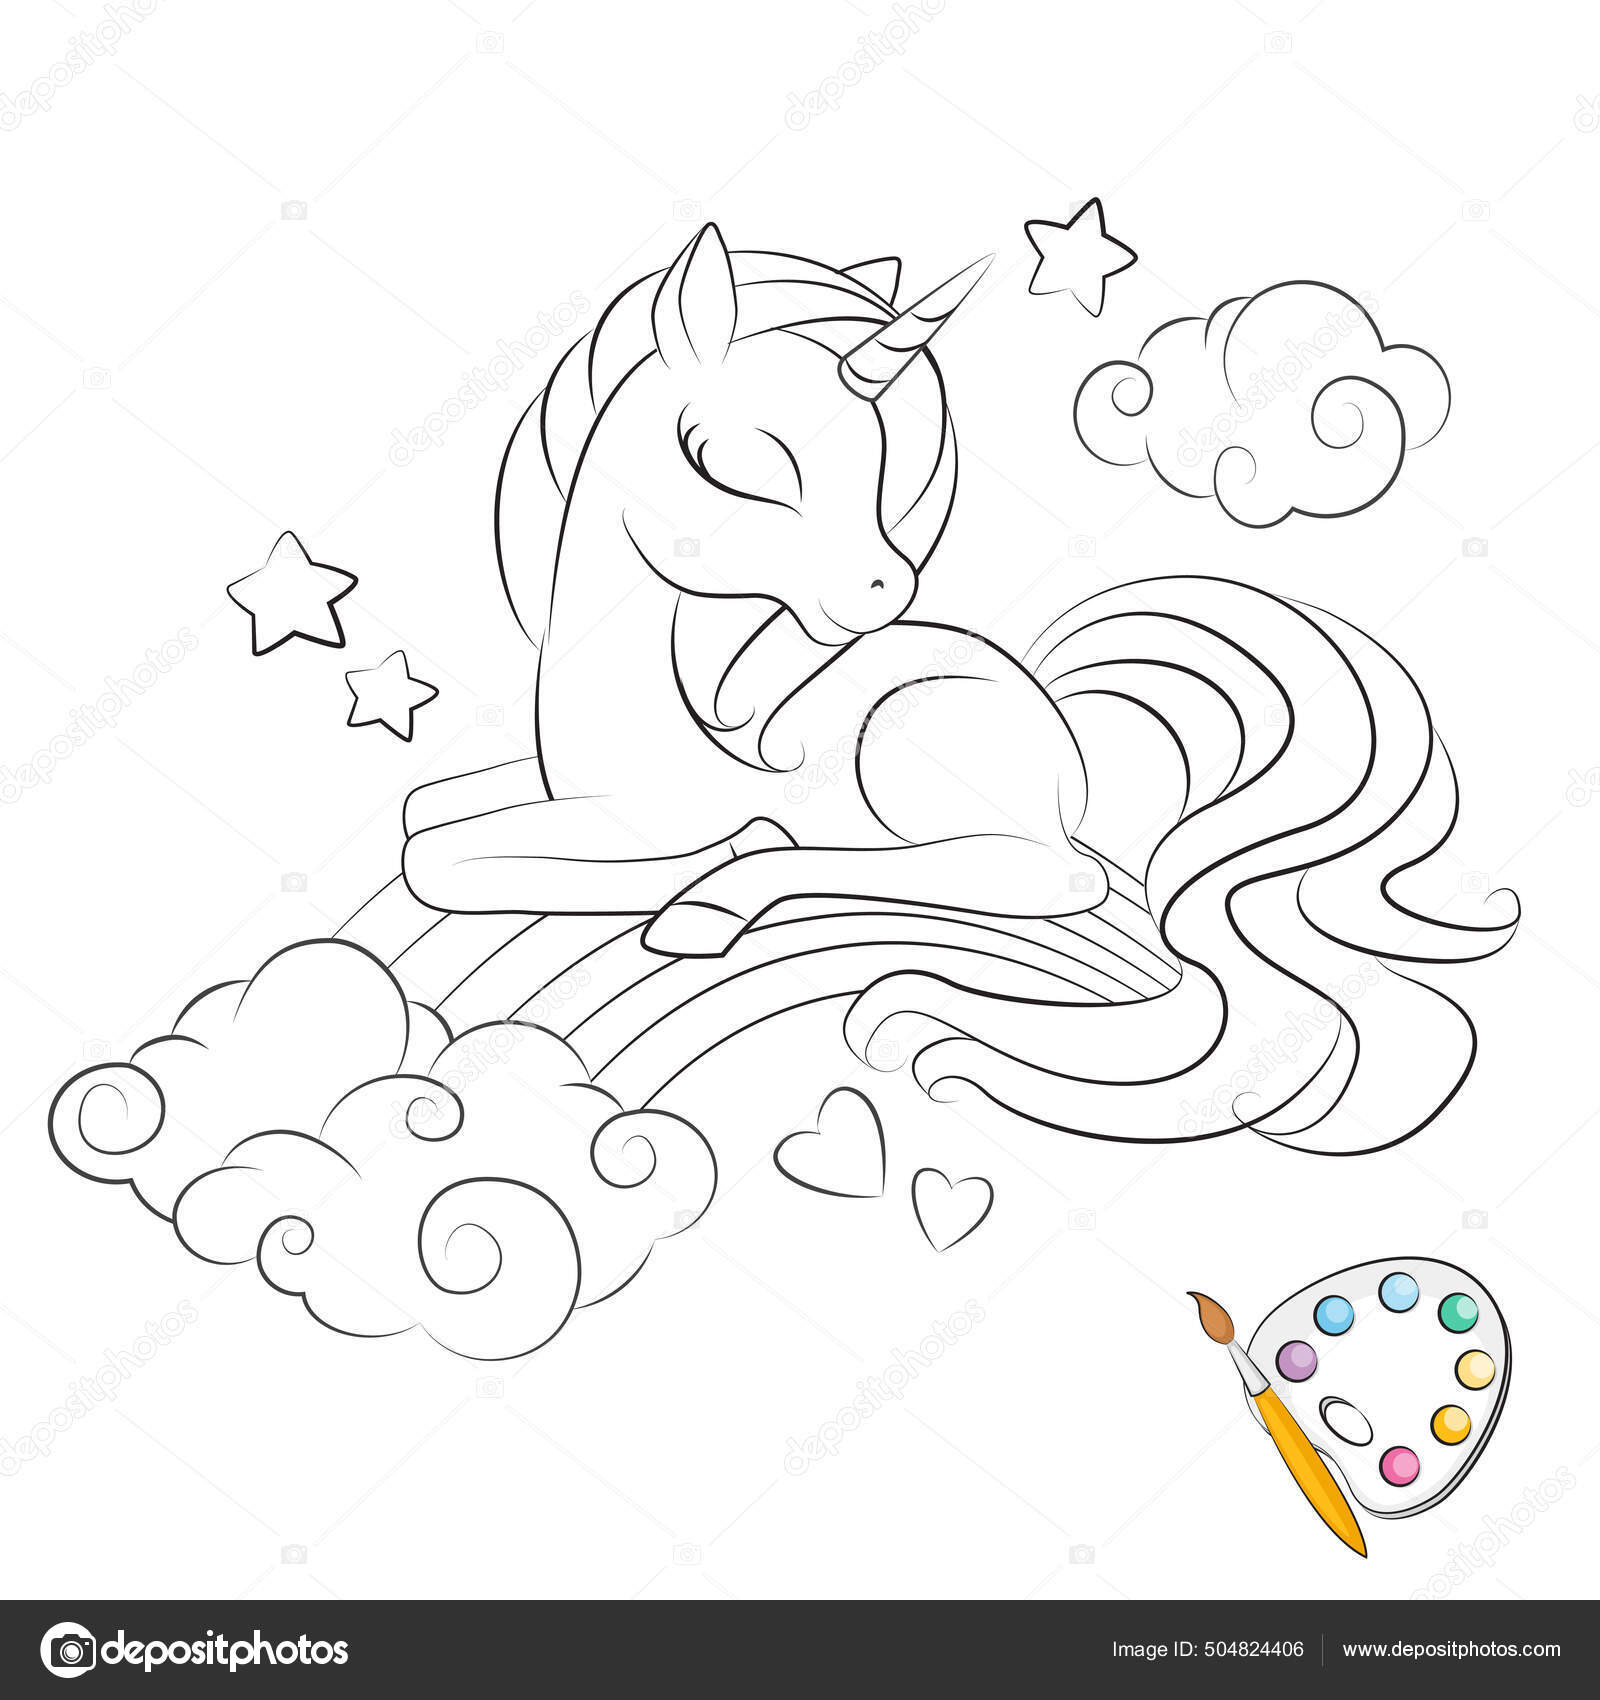 vector desenho de unicornio para criança colorir Stock Illustration